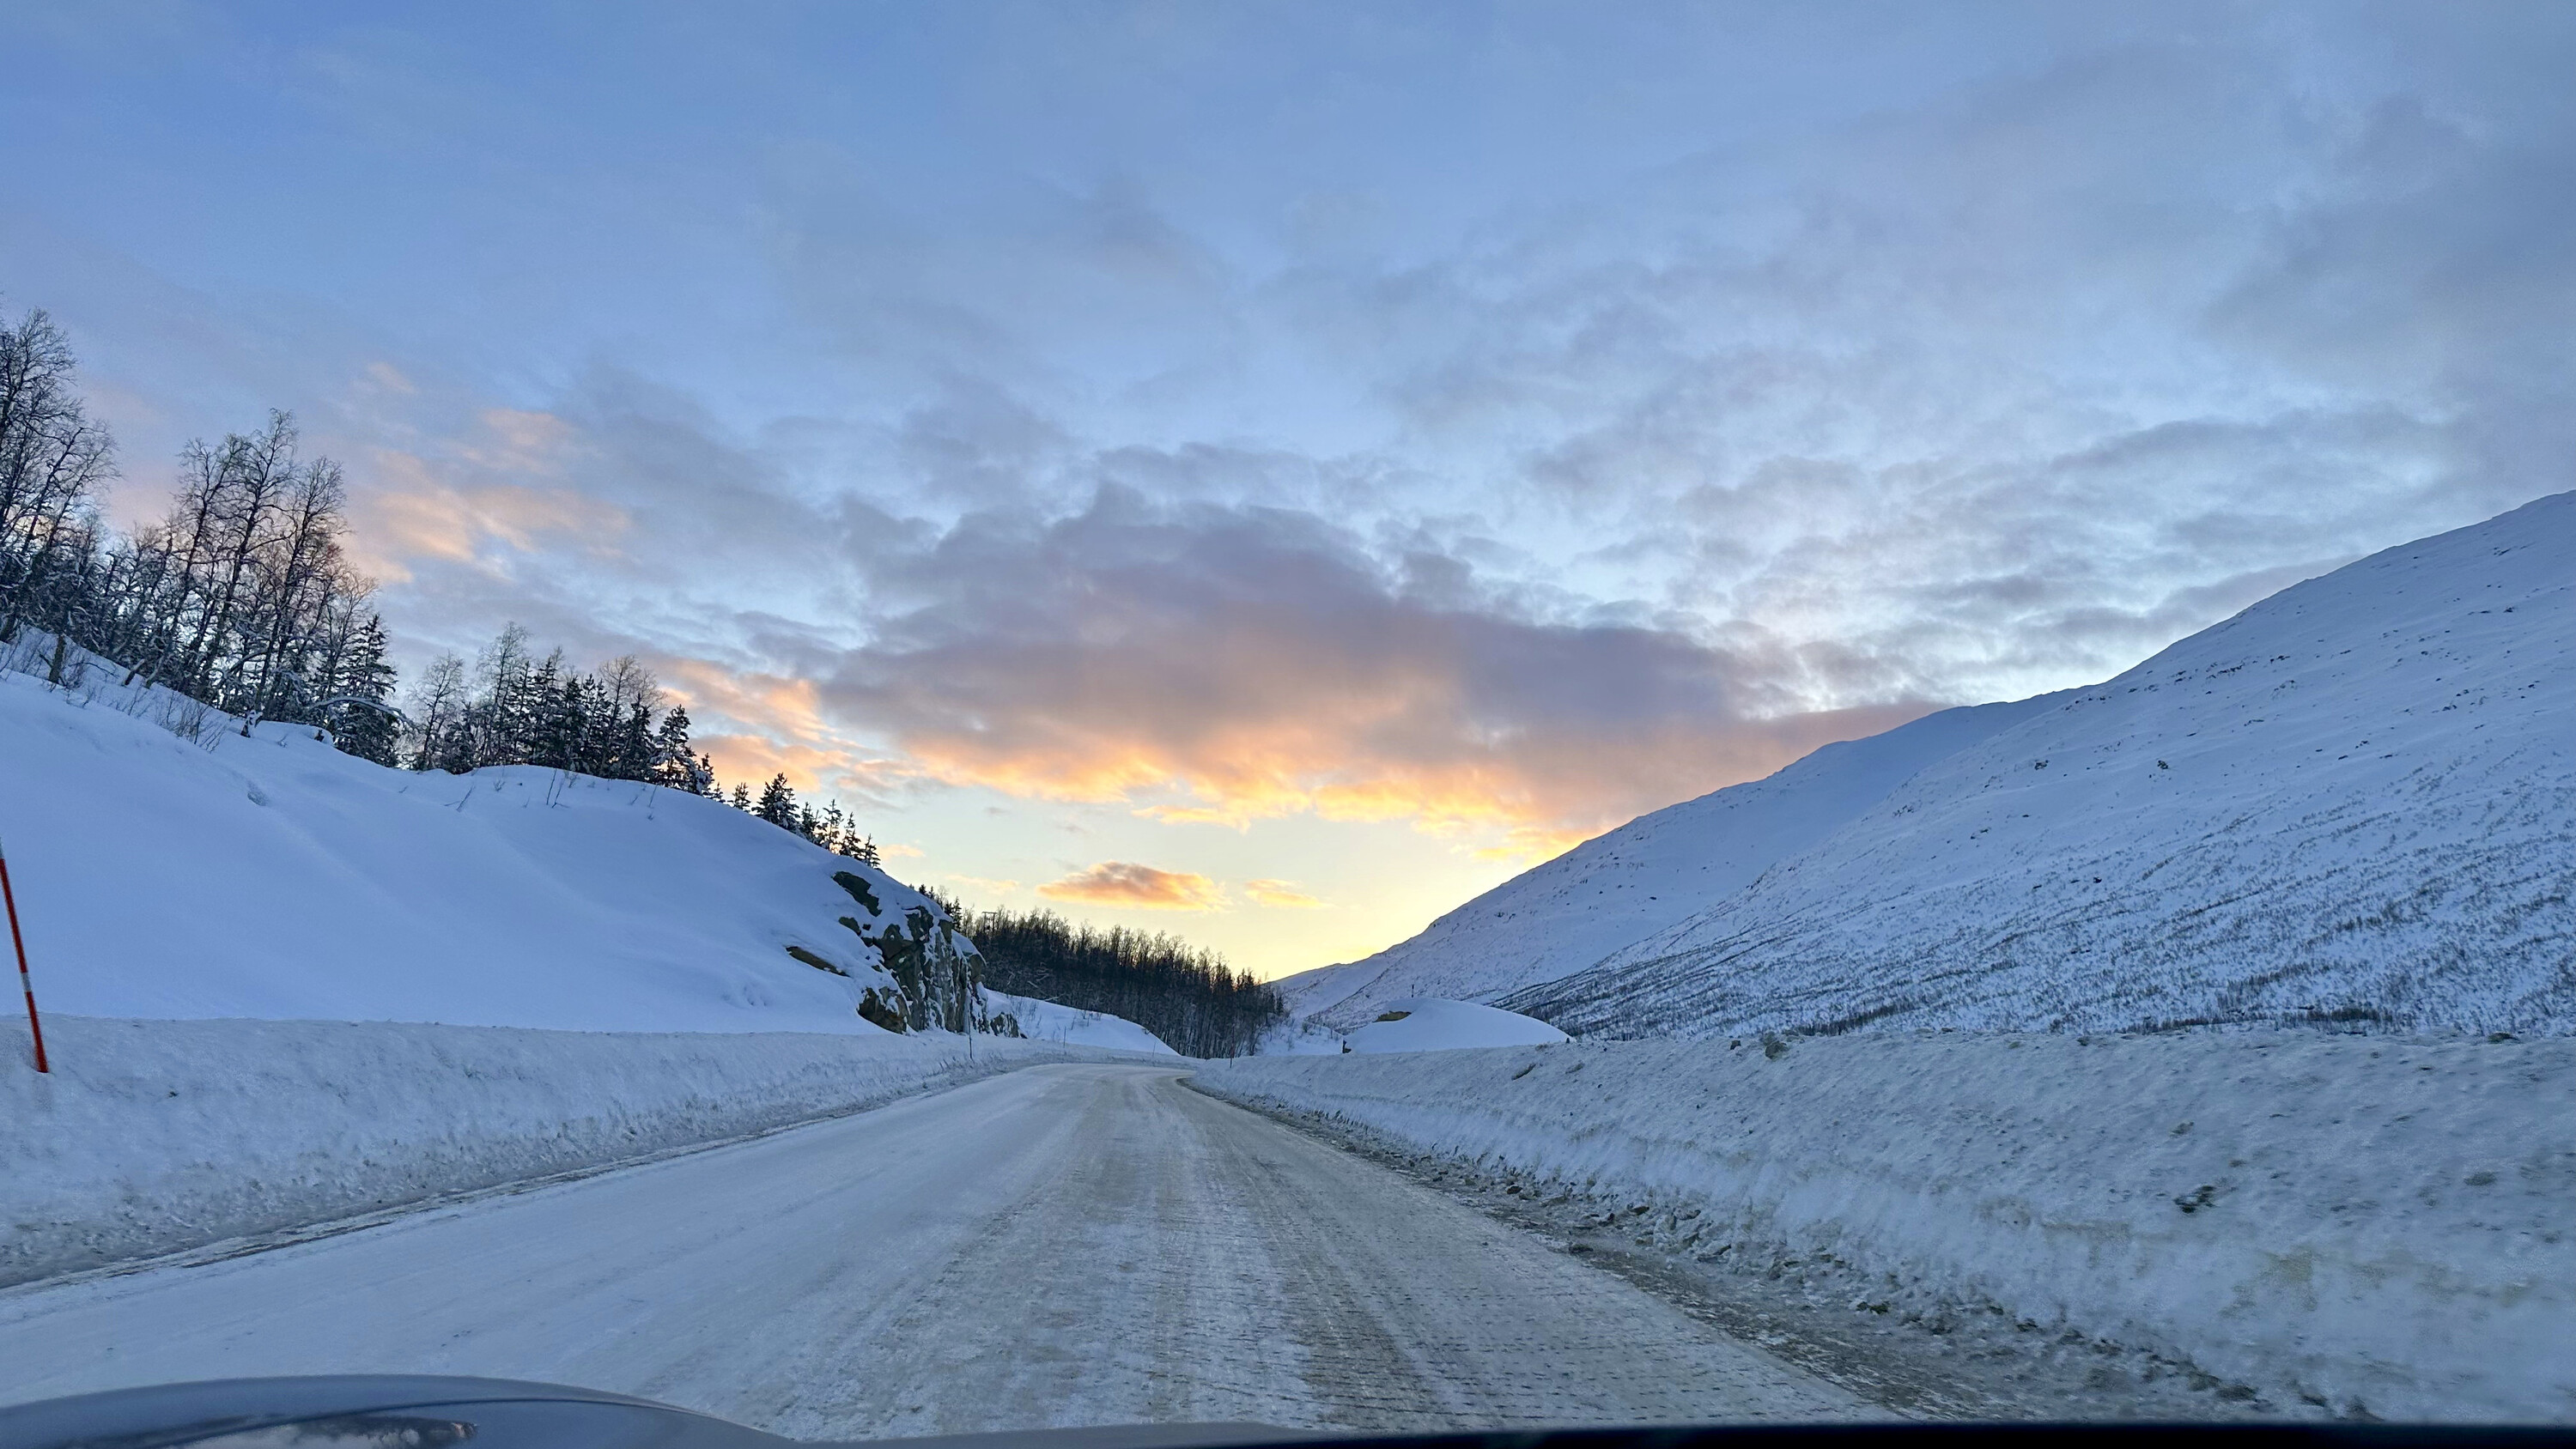 Porsche Taycan Taycan to Tromsø Road Trip – Winter 2023 (Arctic Norway) 52704315922_9316536021_4k